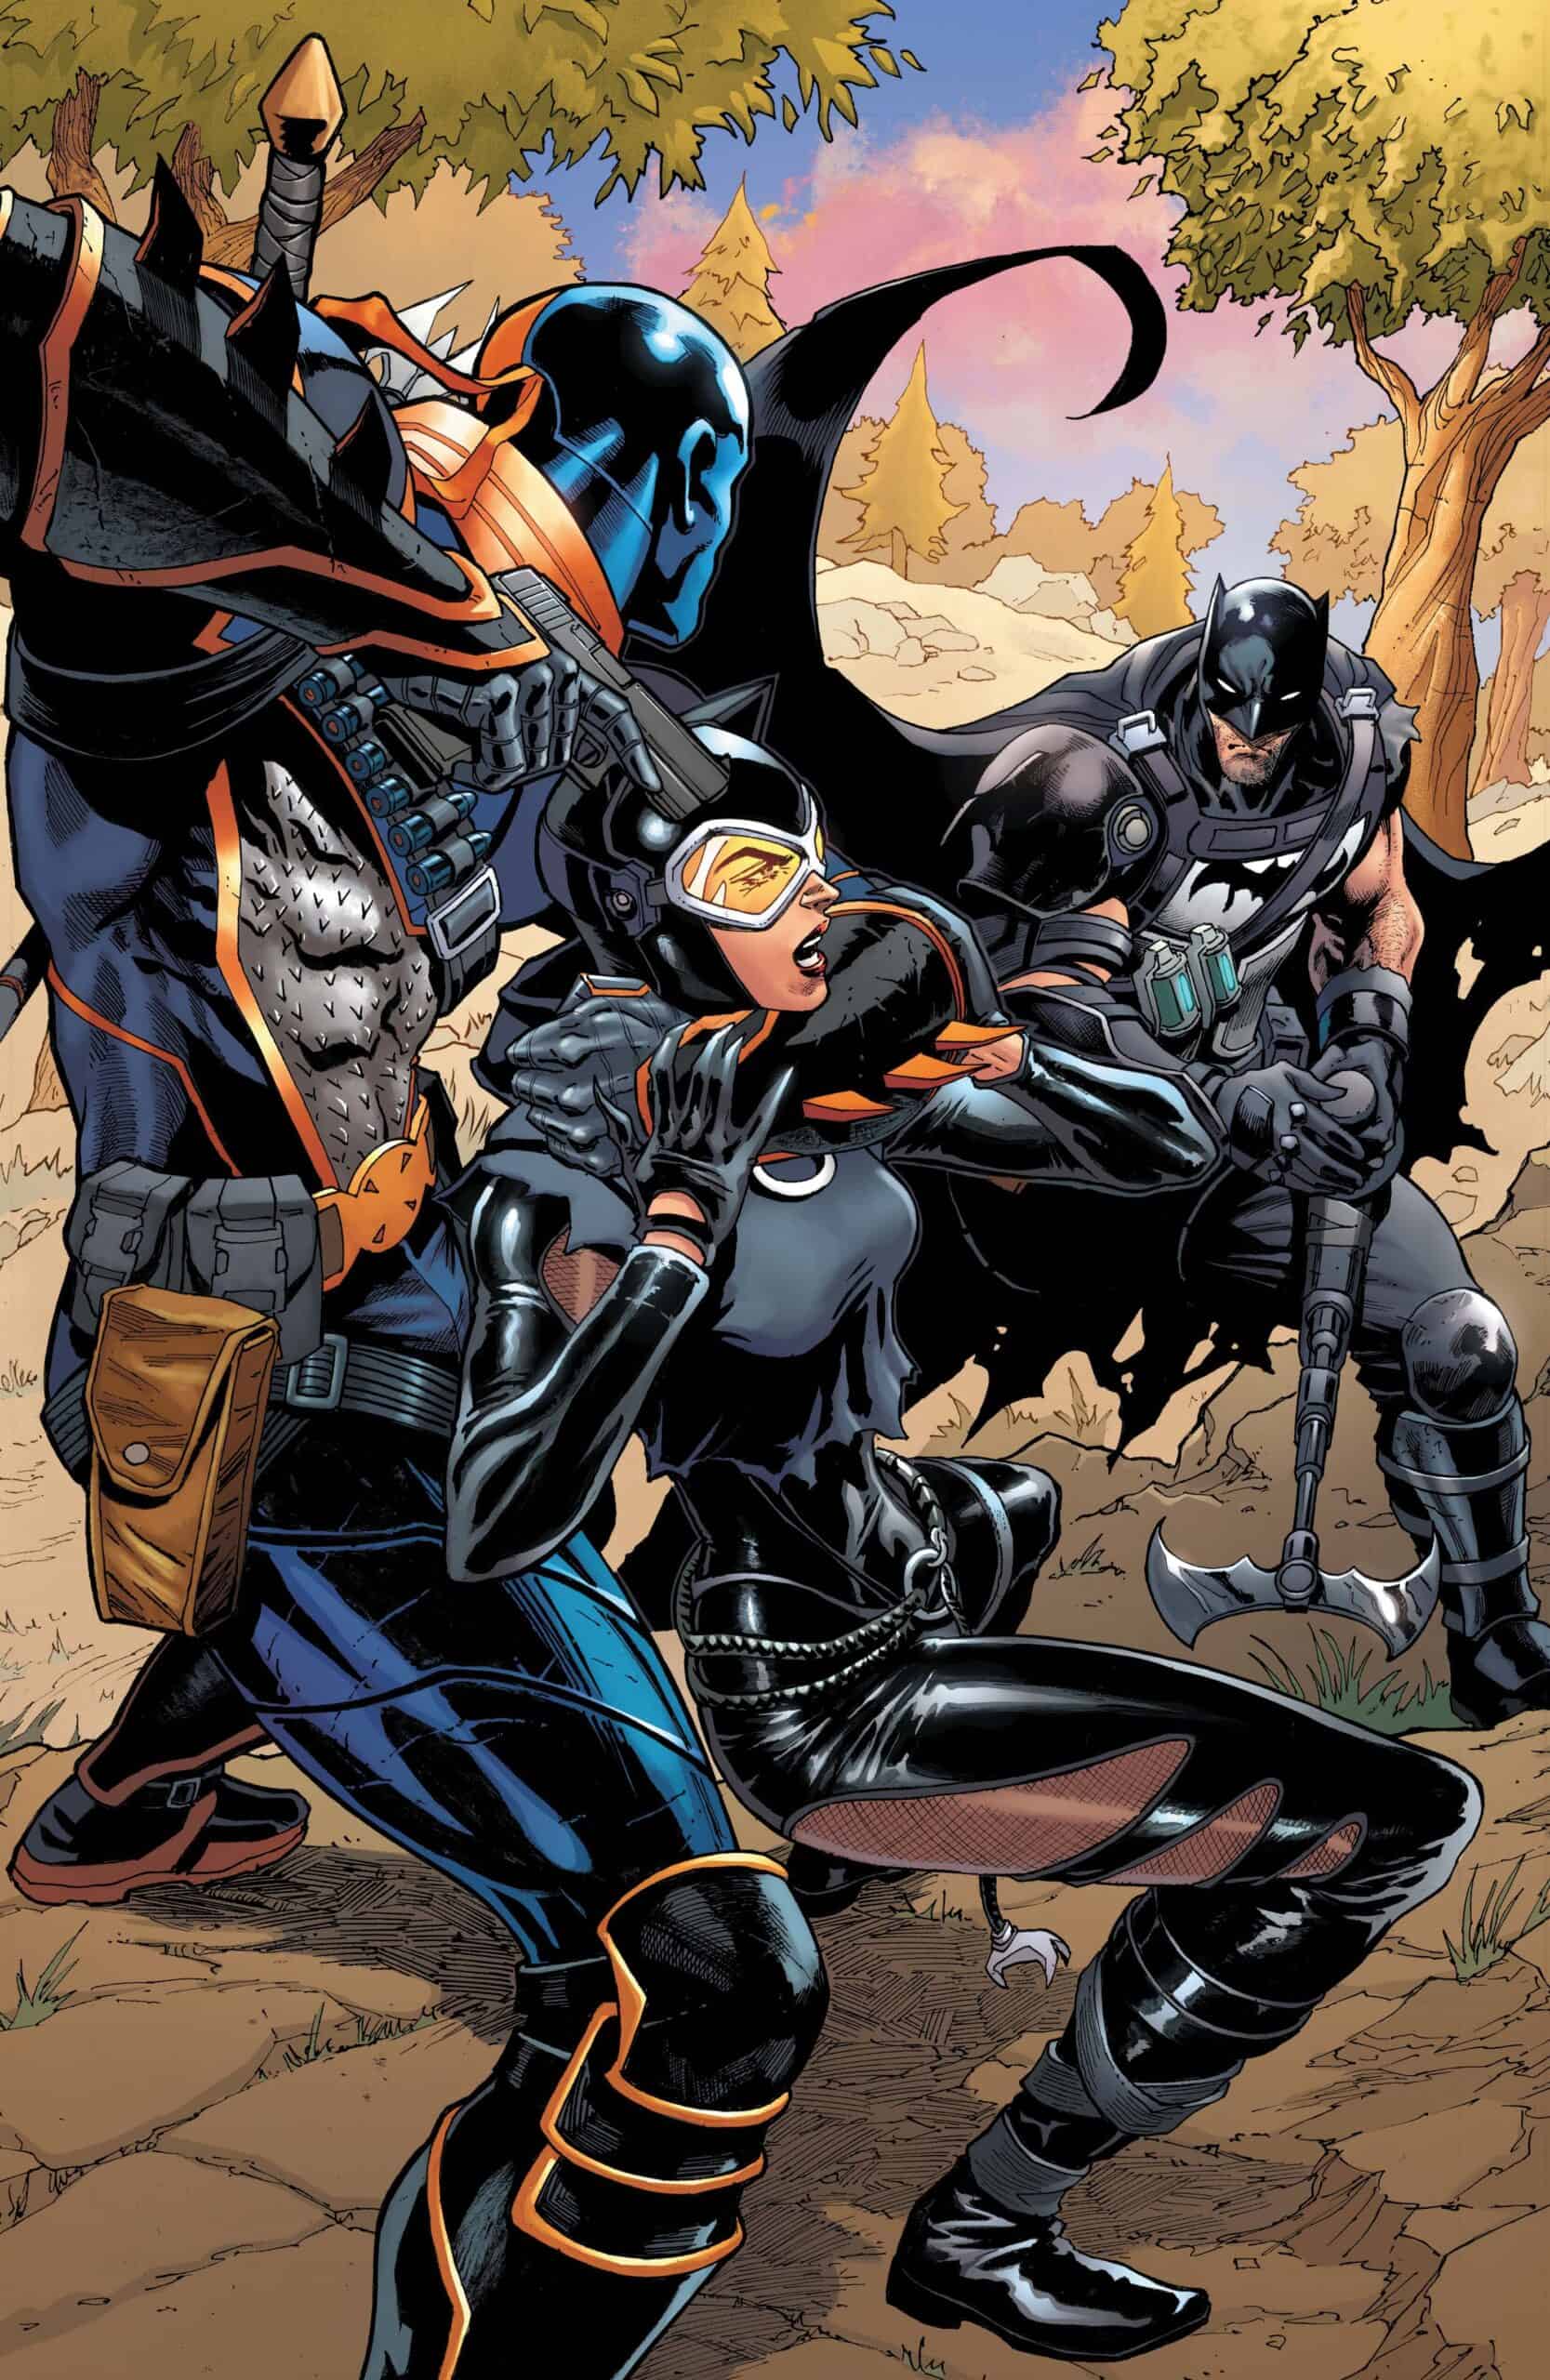 NEWS WATCH: First Look at BATMAN / FORTNITE: ZERO POINT #4 - Comic Watch